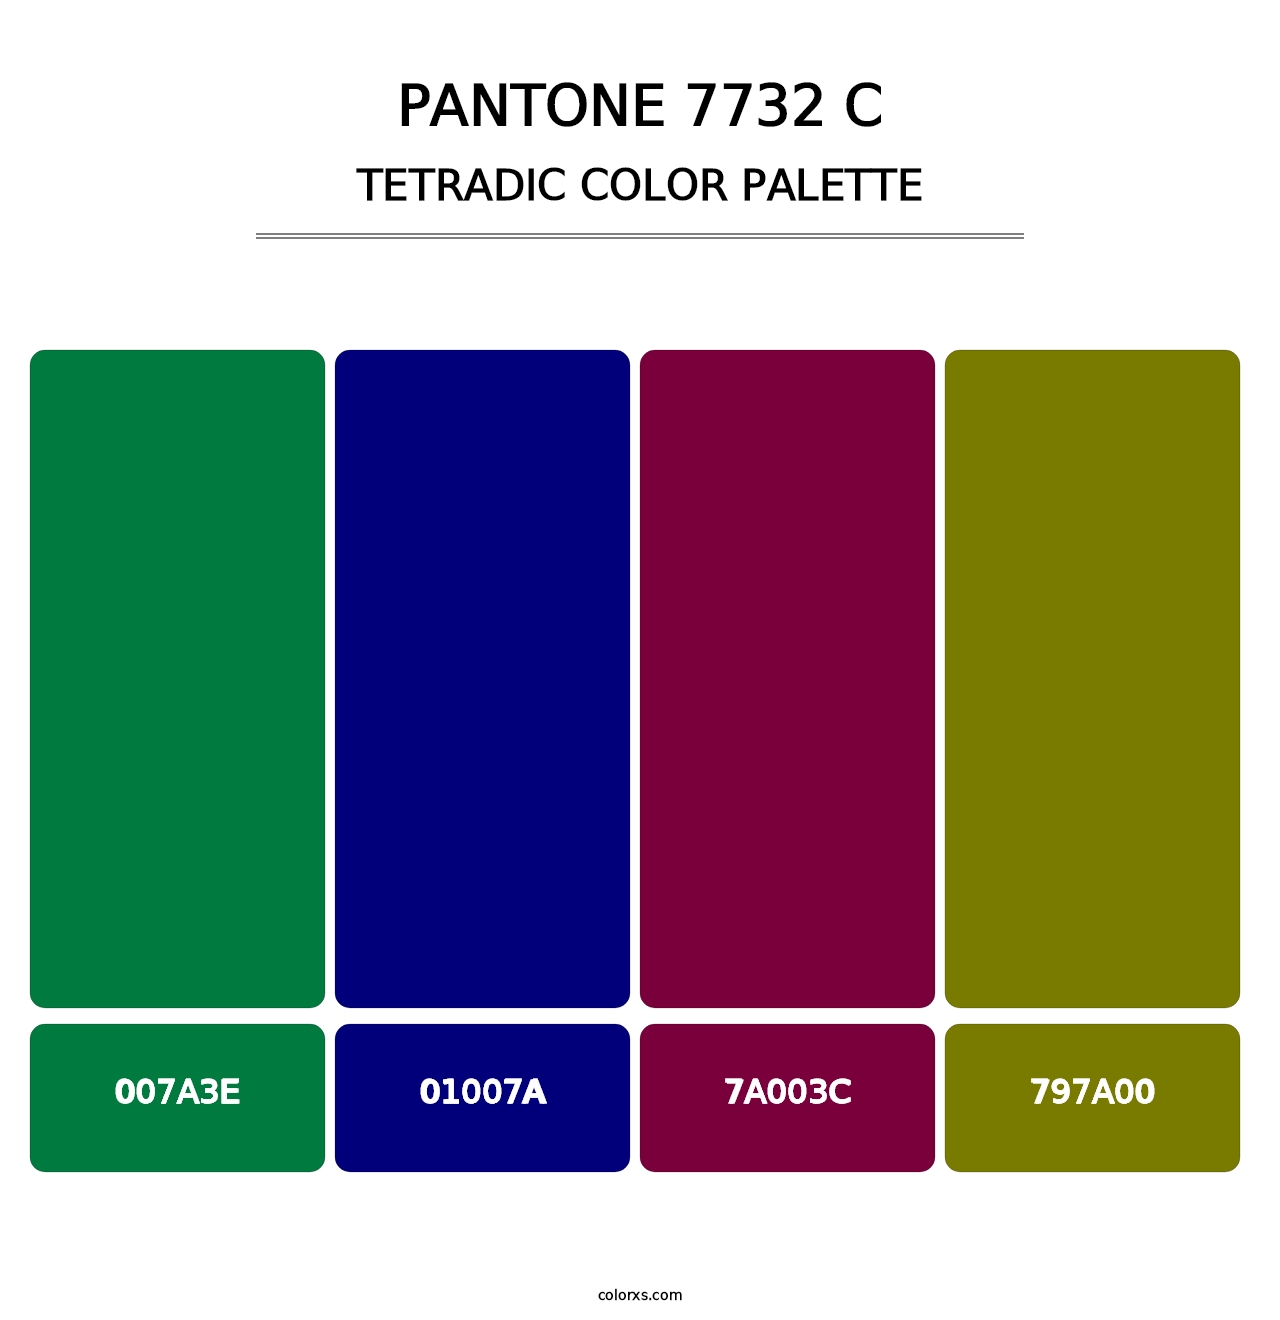 PANTONE 7732 C - Tetradic Color Palette